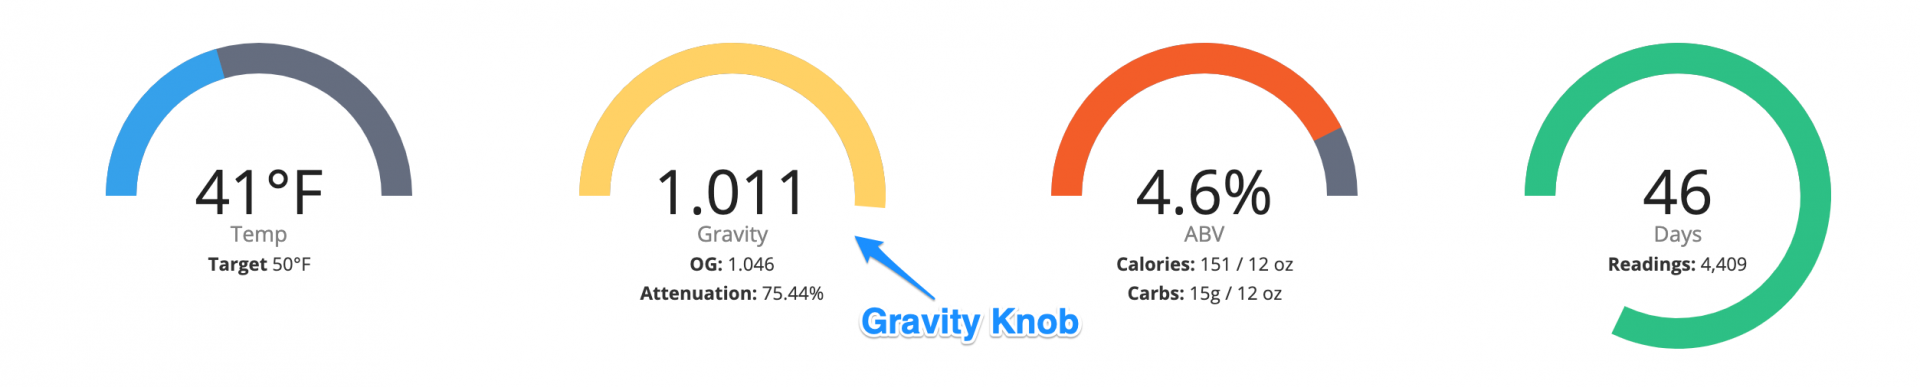 gravity-knob.png